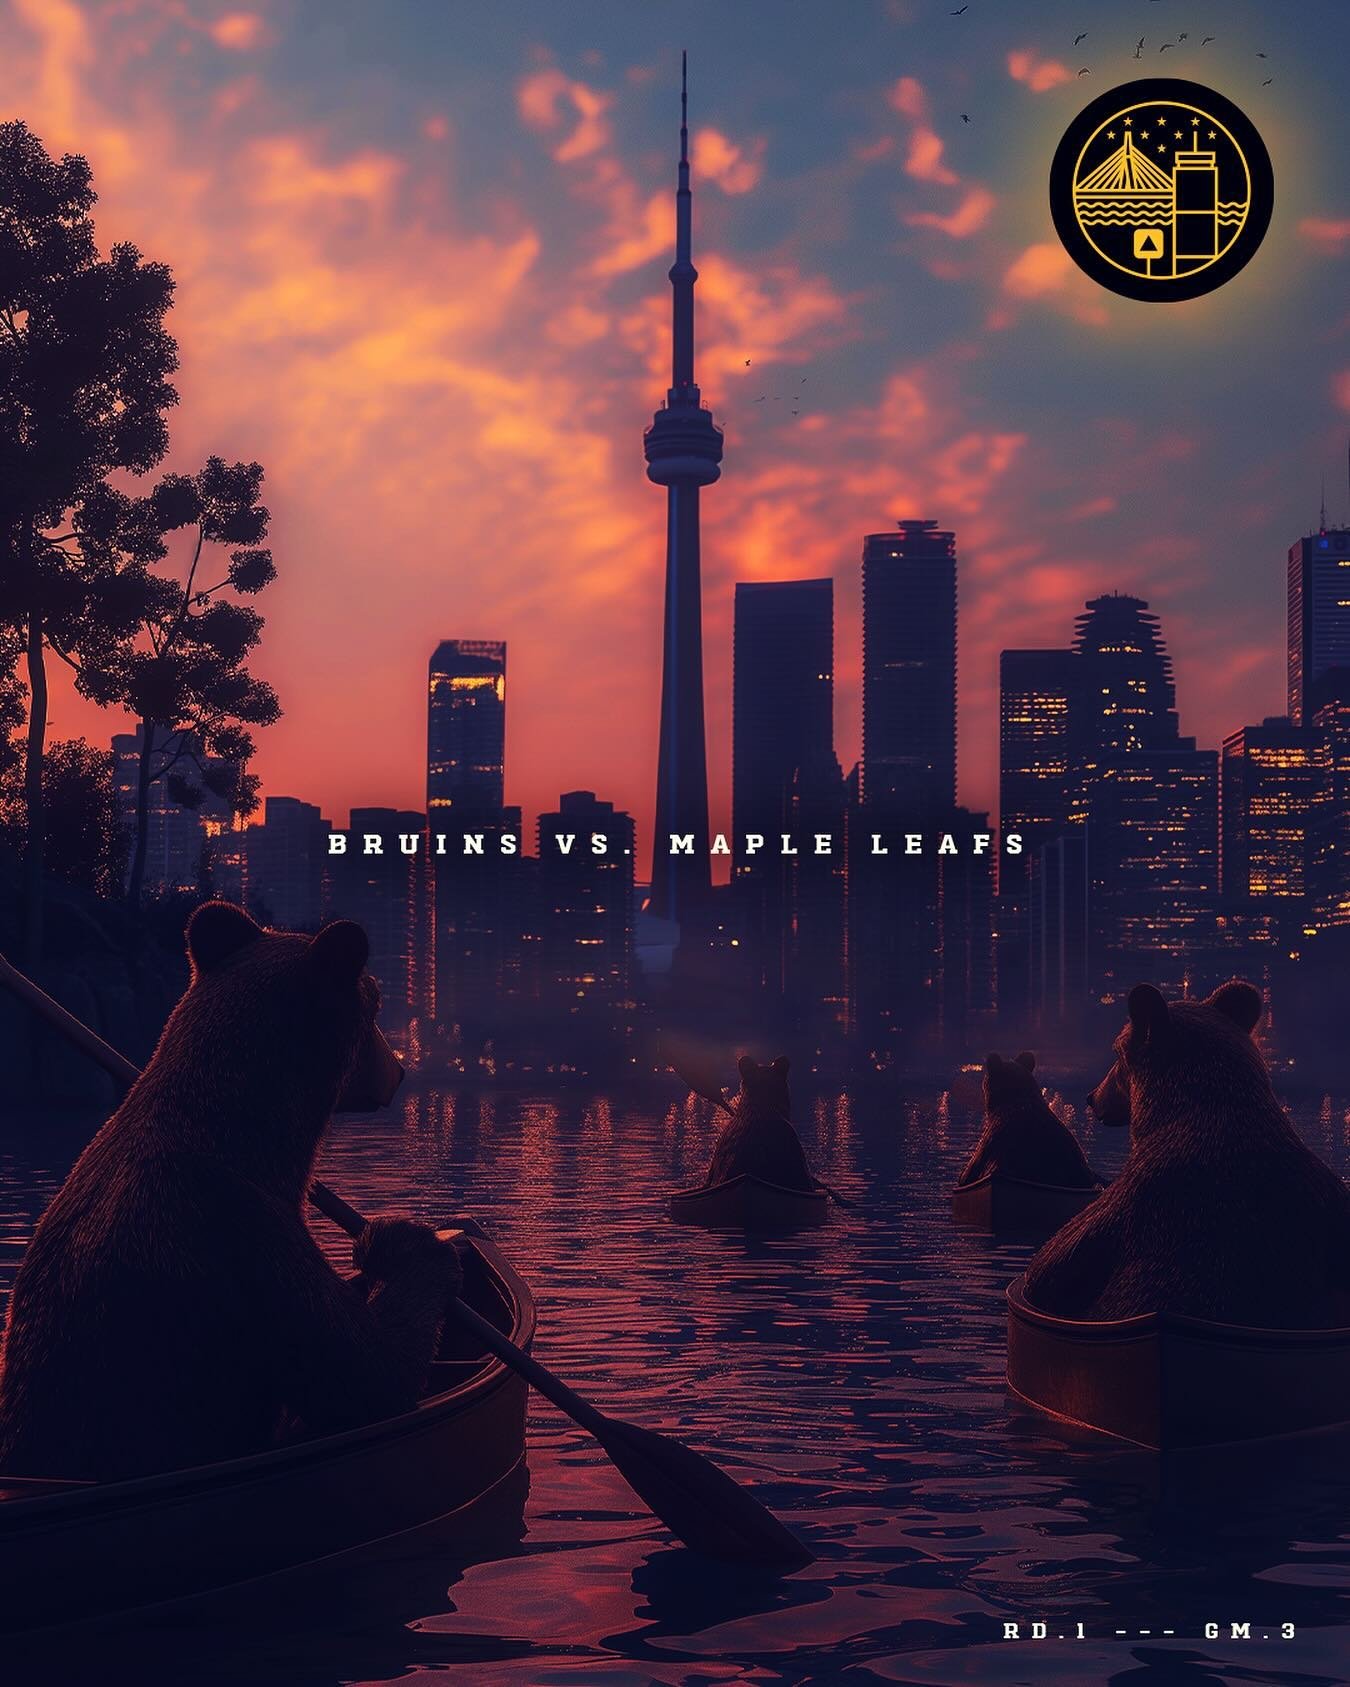 ⚫️🟡 On to Toronto. Game three tonight. Let&rsquo;s go Bruins!
#personalproject #bostonbruins #boston #nhl #hockey #nhlbruins #playoffs #graphicdesign #digitaldesign #mikeschaefferdesign